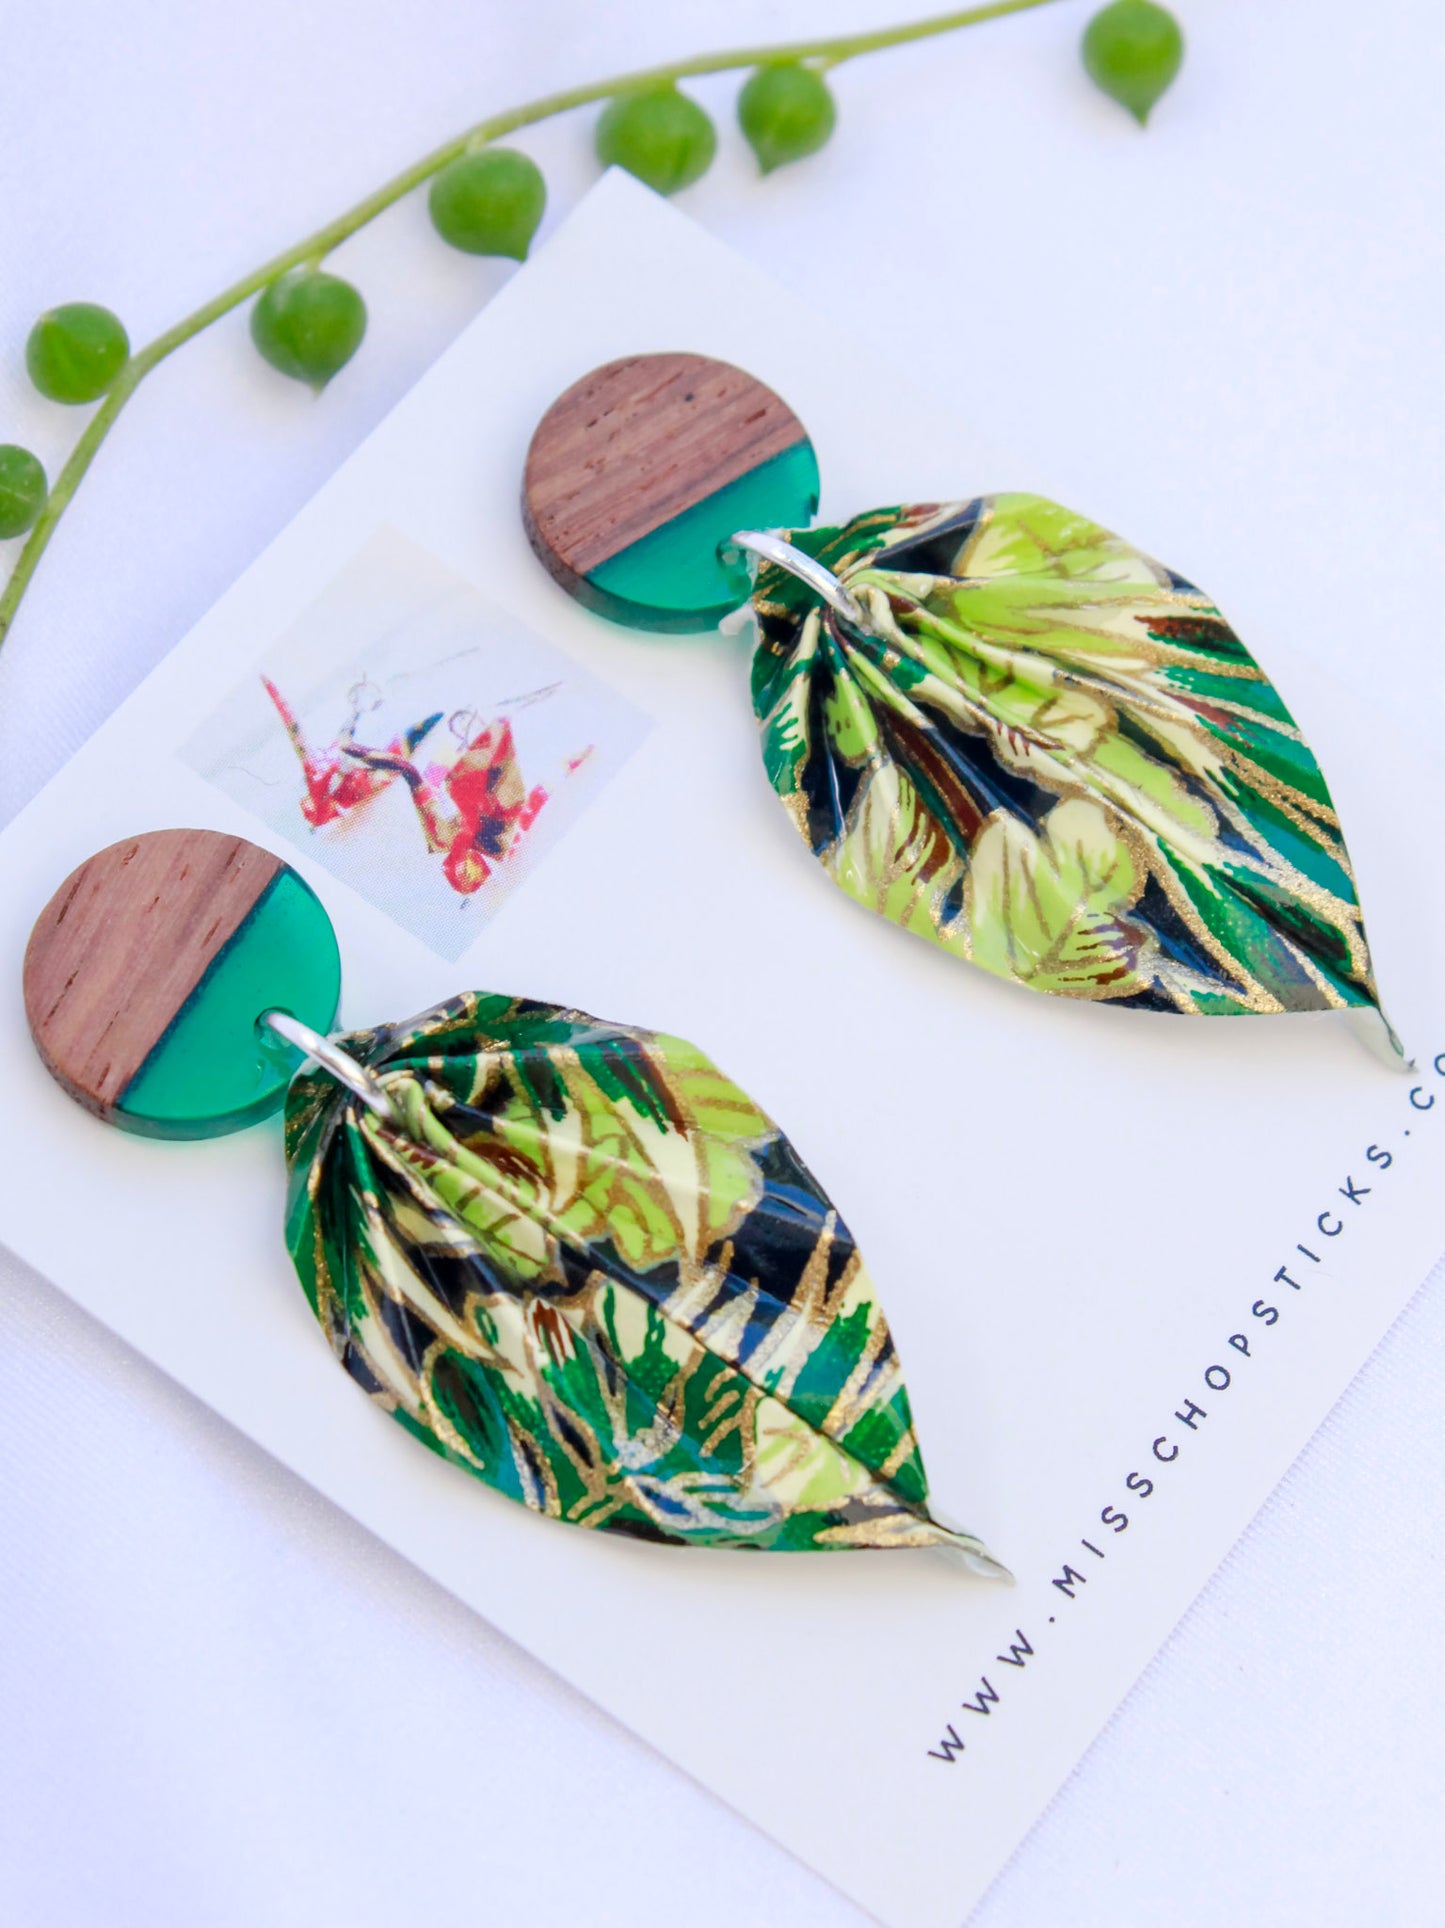 Origami-Earrings-Leaf-Wooden-Resin-Studs-Green